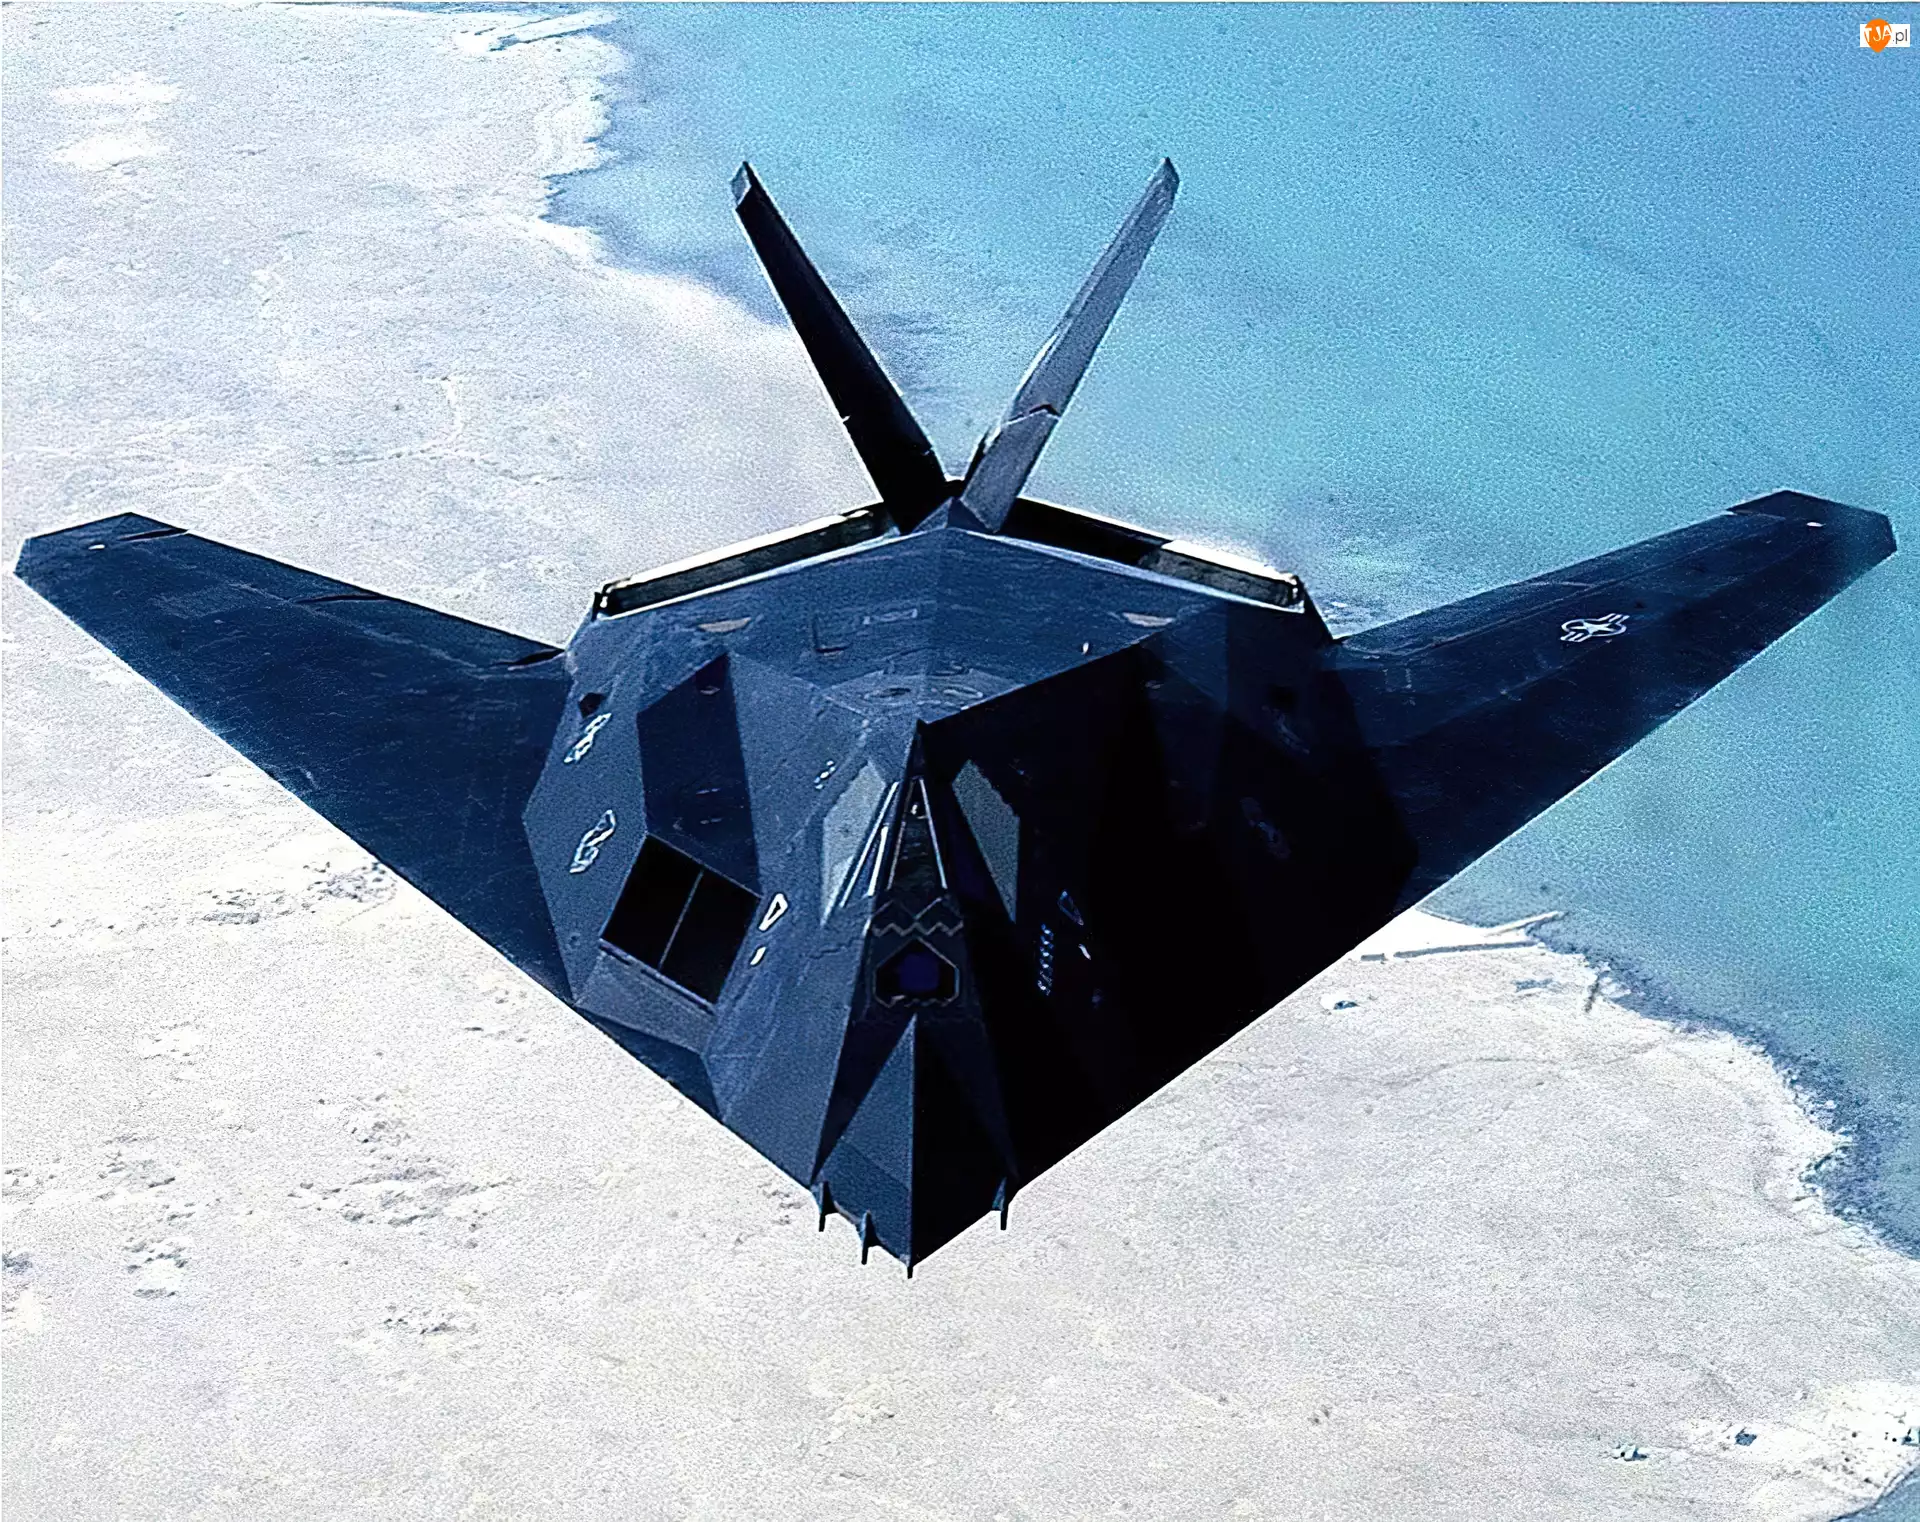 Bombowiec, F-117 Nighthawk